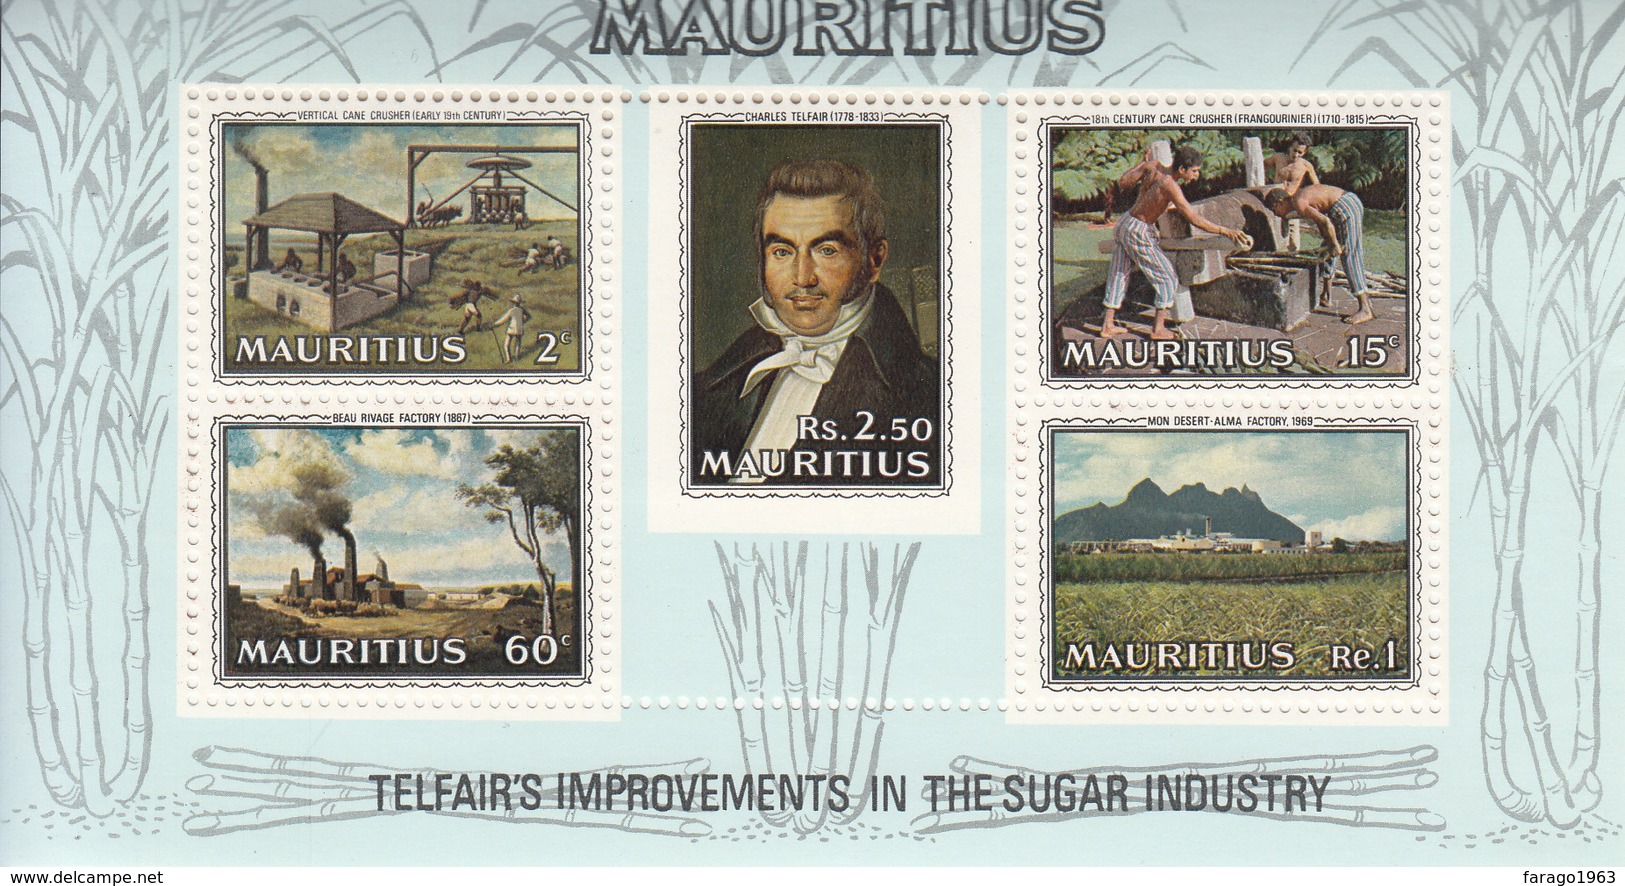 1969 Mauritius Telfair’s Improvements To Sugar Industry Portrait, Cane Crusher, Factory, Plantation  Souvenir Sheet Of 5 - Mauritius (1968-...)